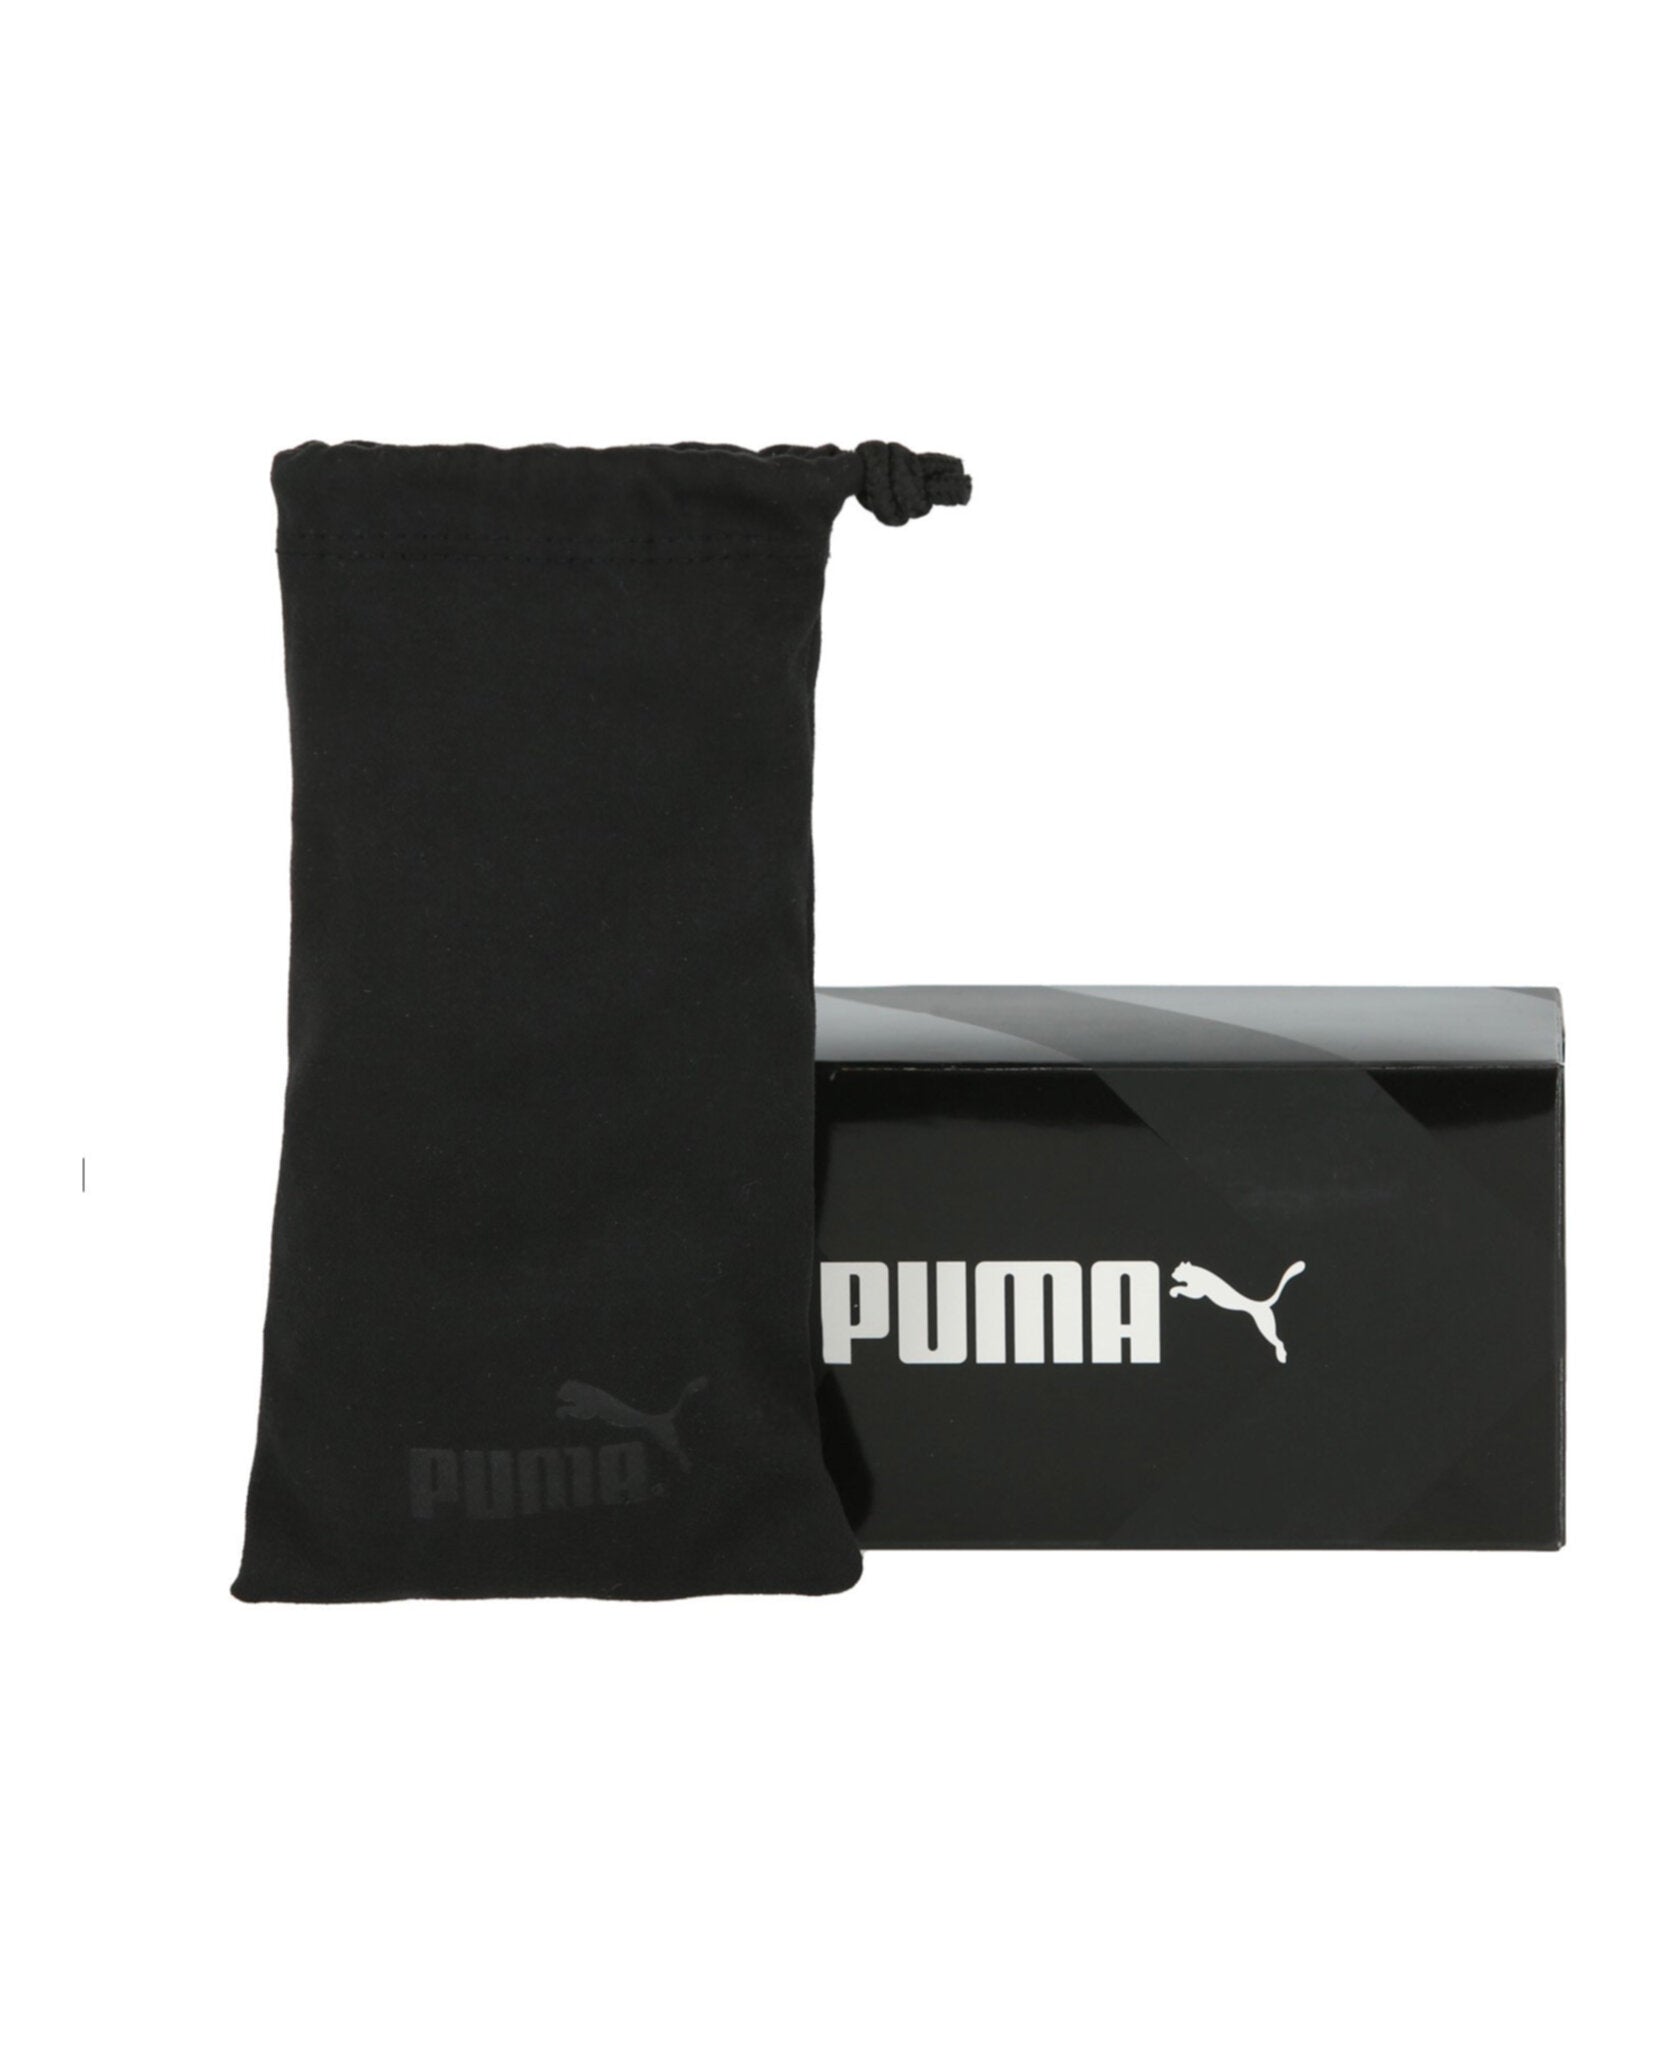 title:Puma Square-Frame Metal Optical Frames, style # PE0153OI-30010936001;color:Black Black Transparent